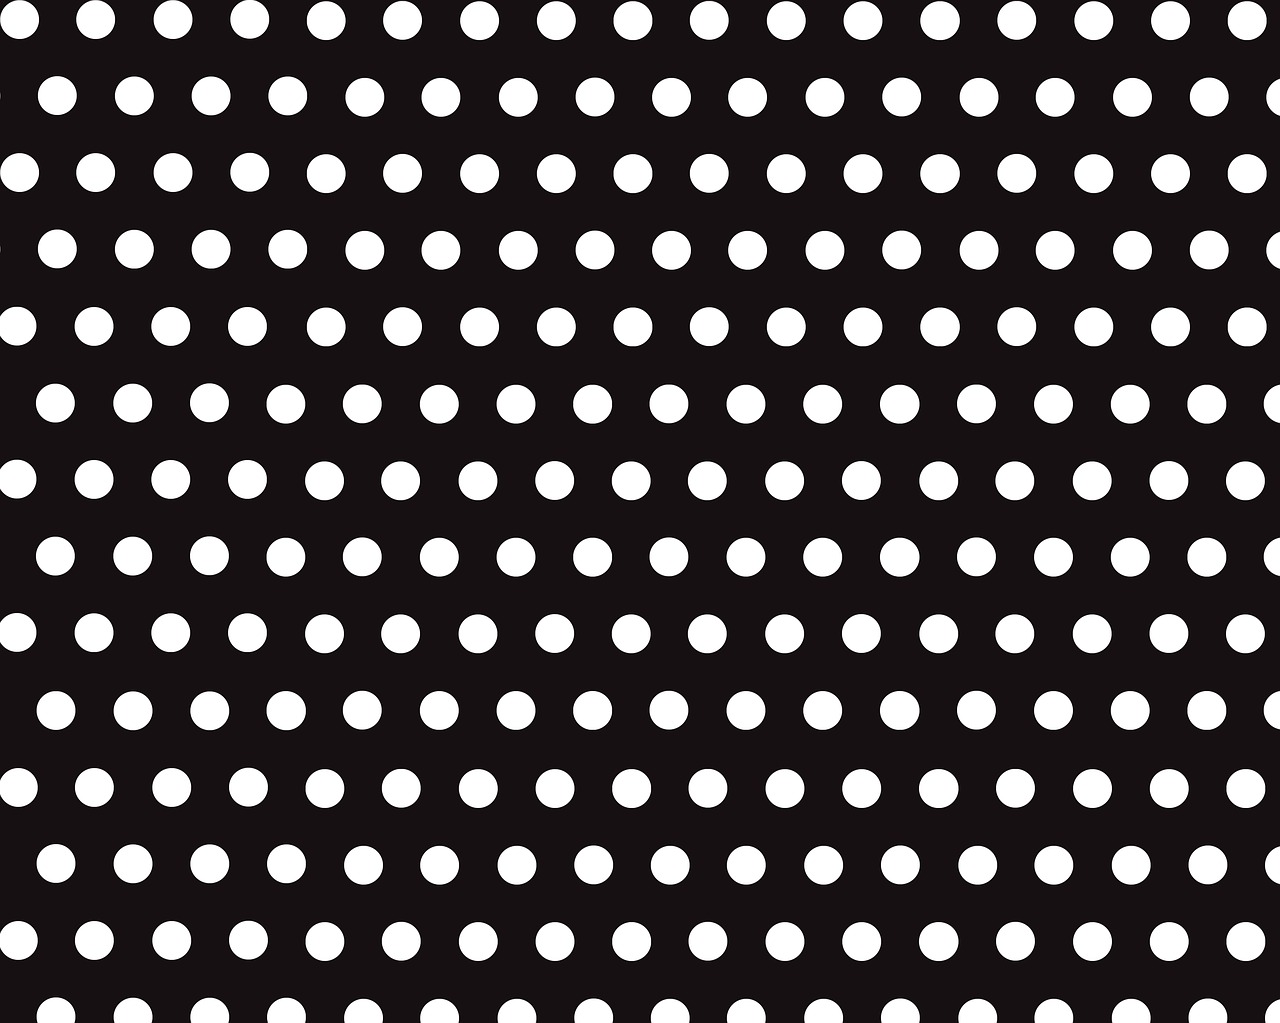 background black background polka dots free photo